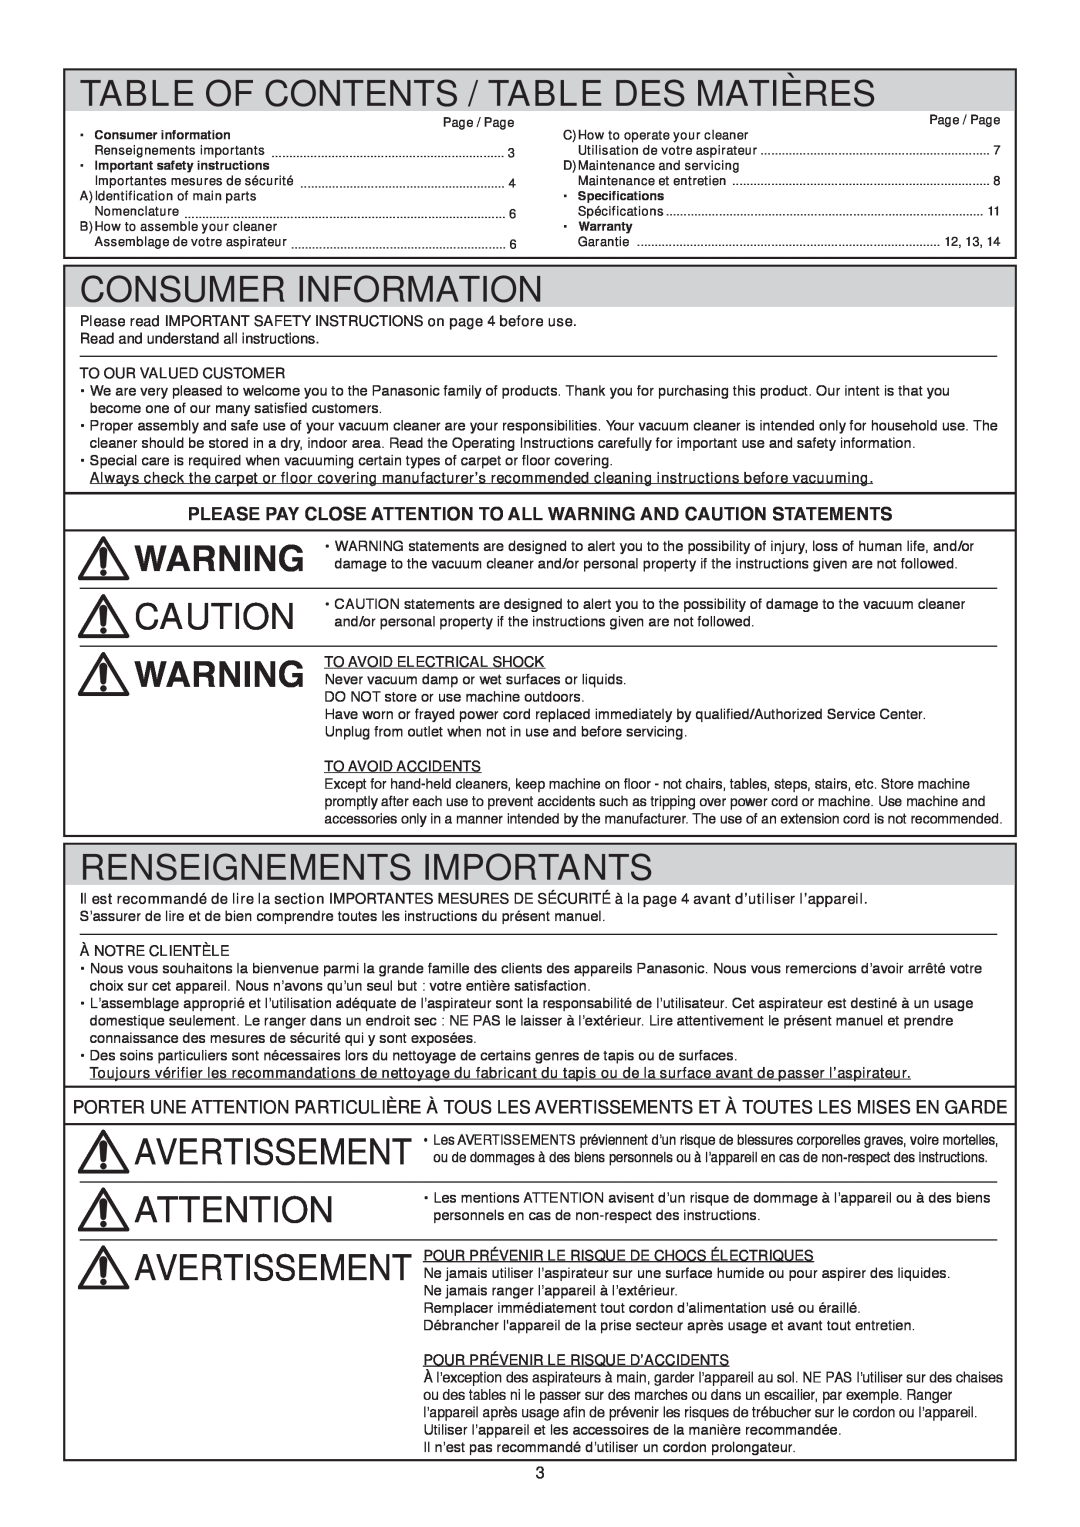 Panasonic Mccl485 Table Of Contents / Table Des Matières, Consumer Information, Renseignements Importants, Avertissement 